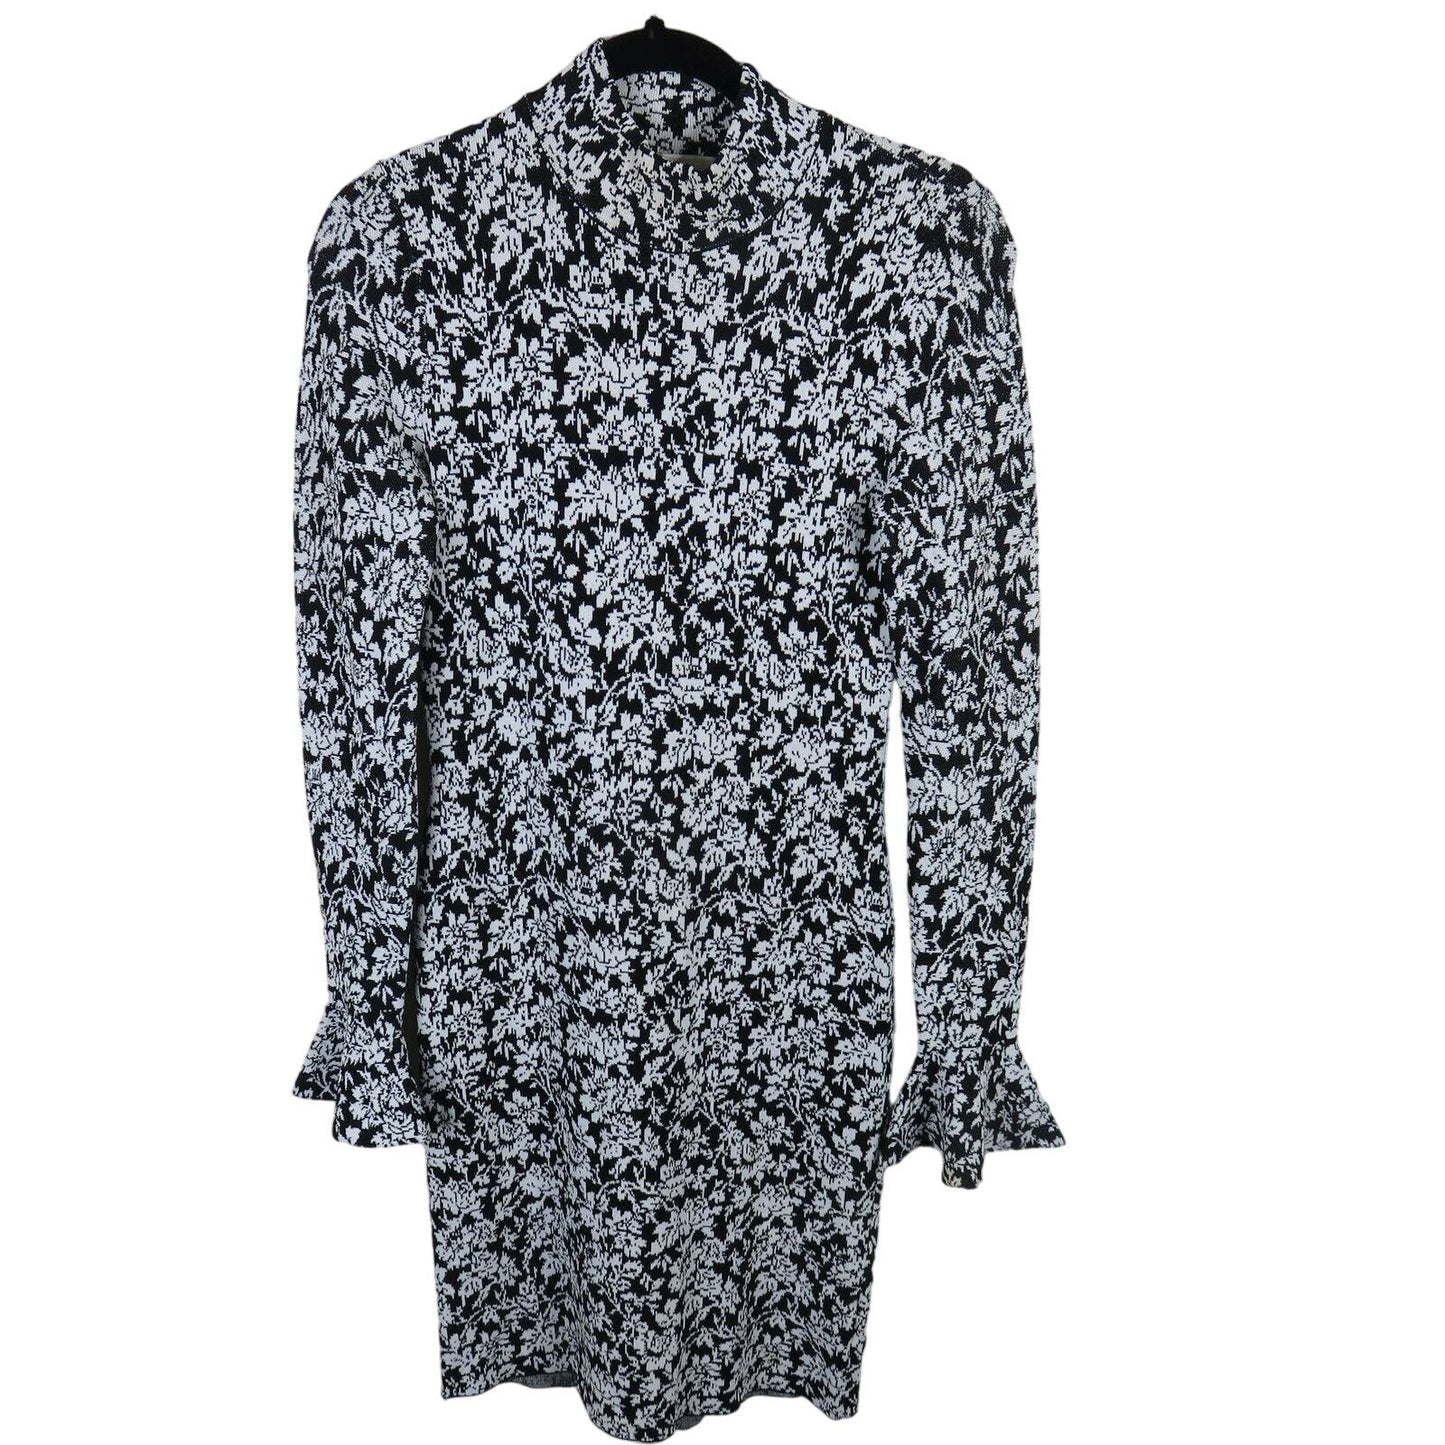 Michael Kors Bodycon Black and White Pattern Dress - Women's Small